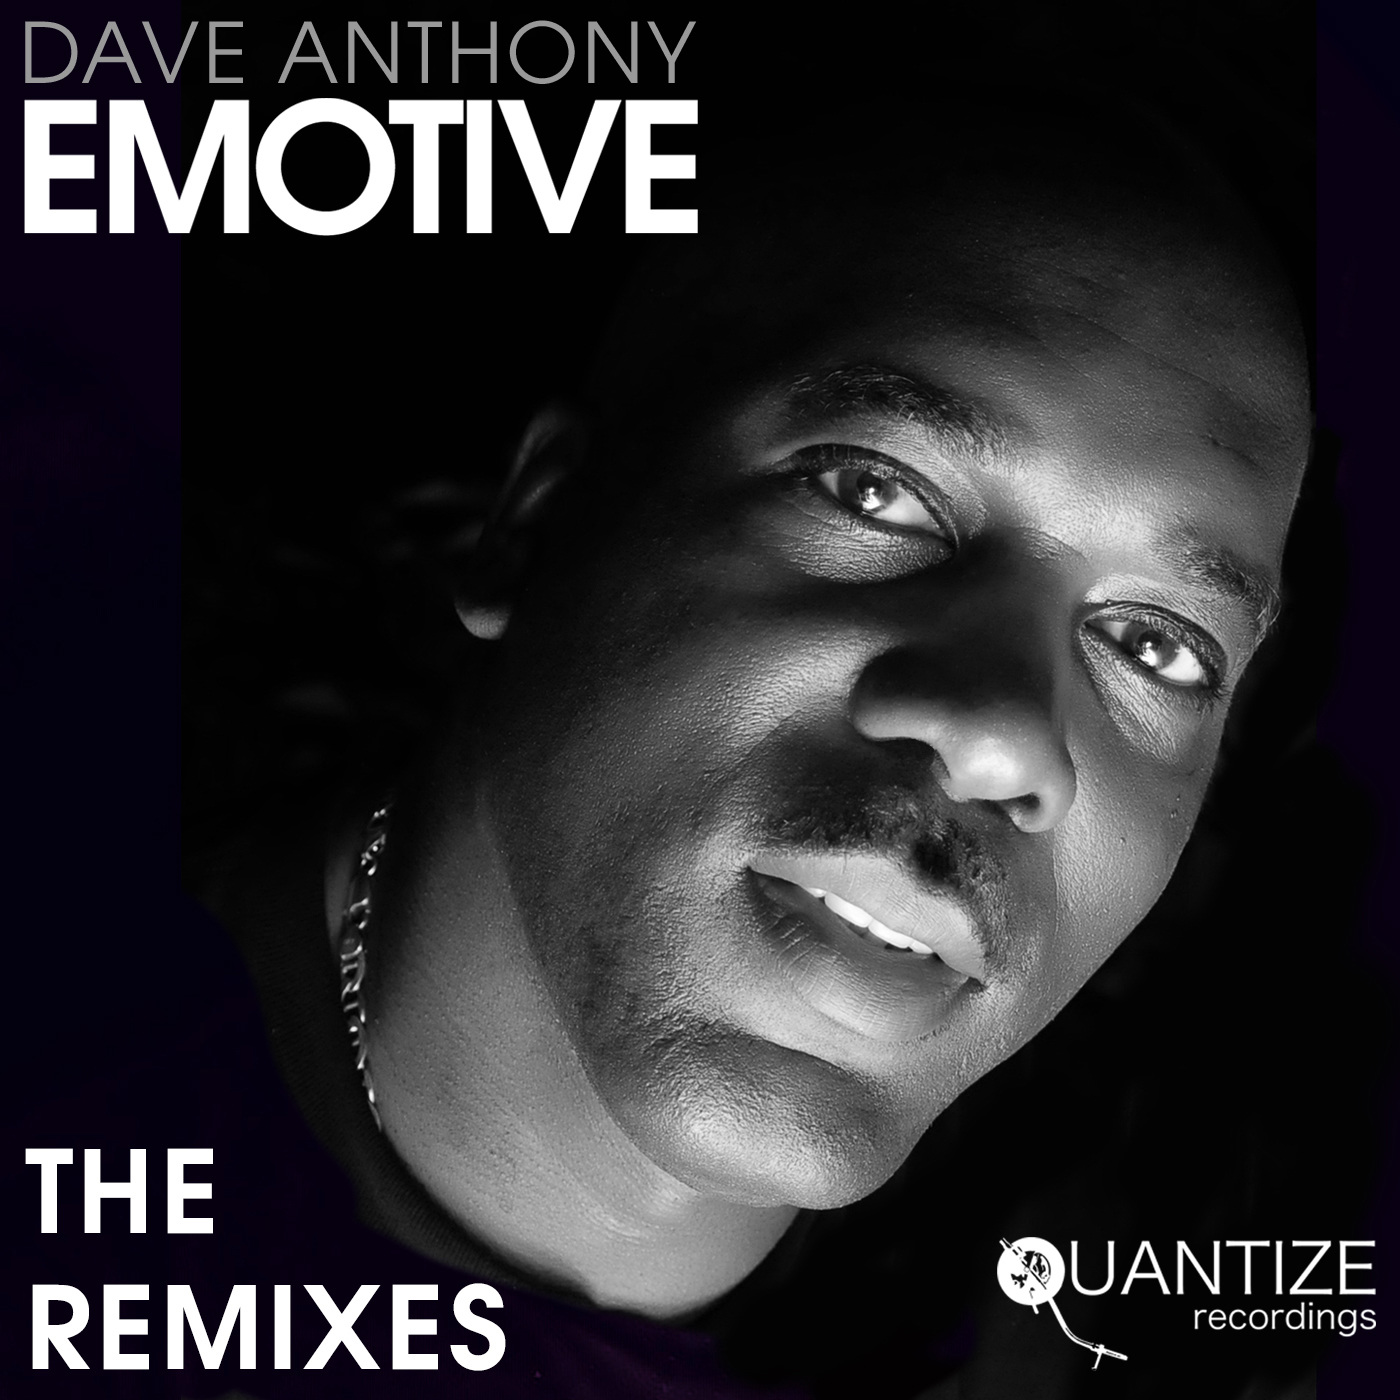 Dave Anthony - Emotive (The Remixes) / Quantize Recordings